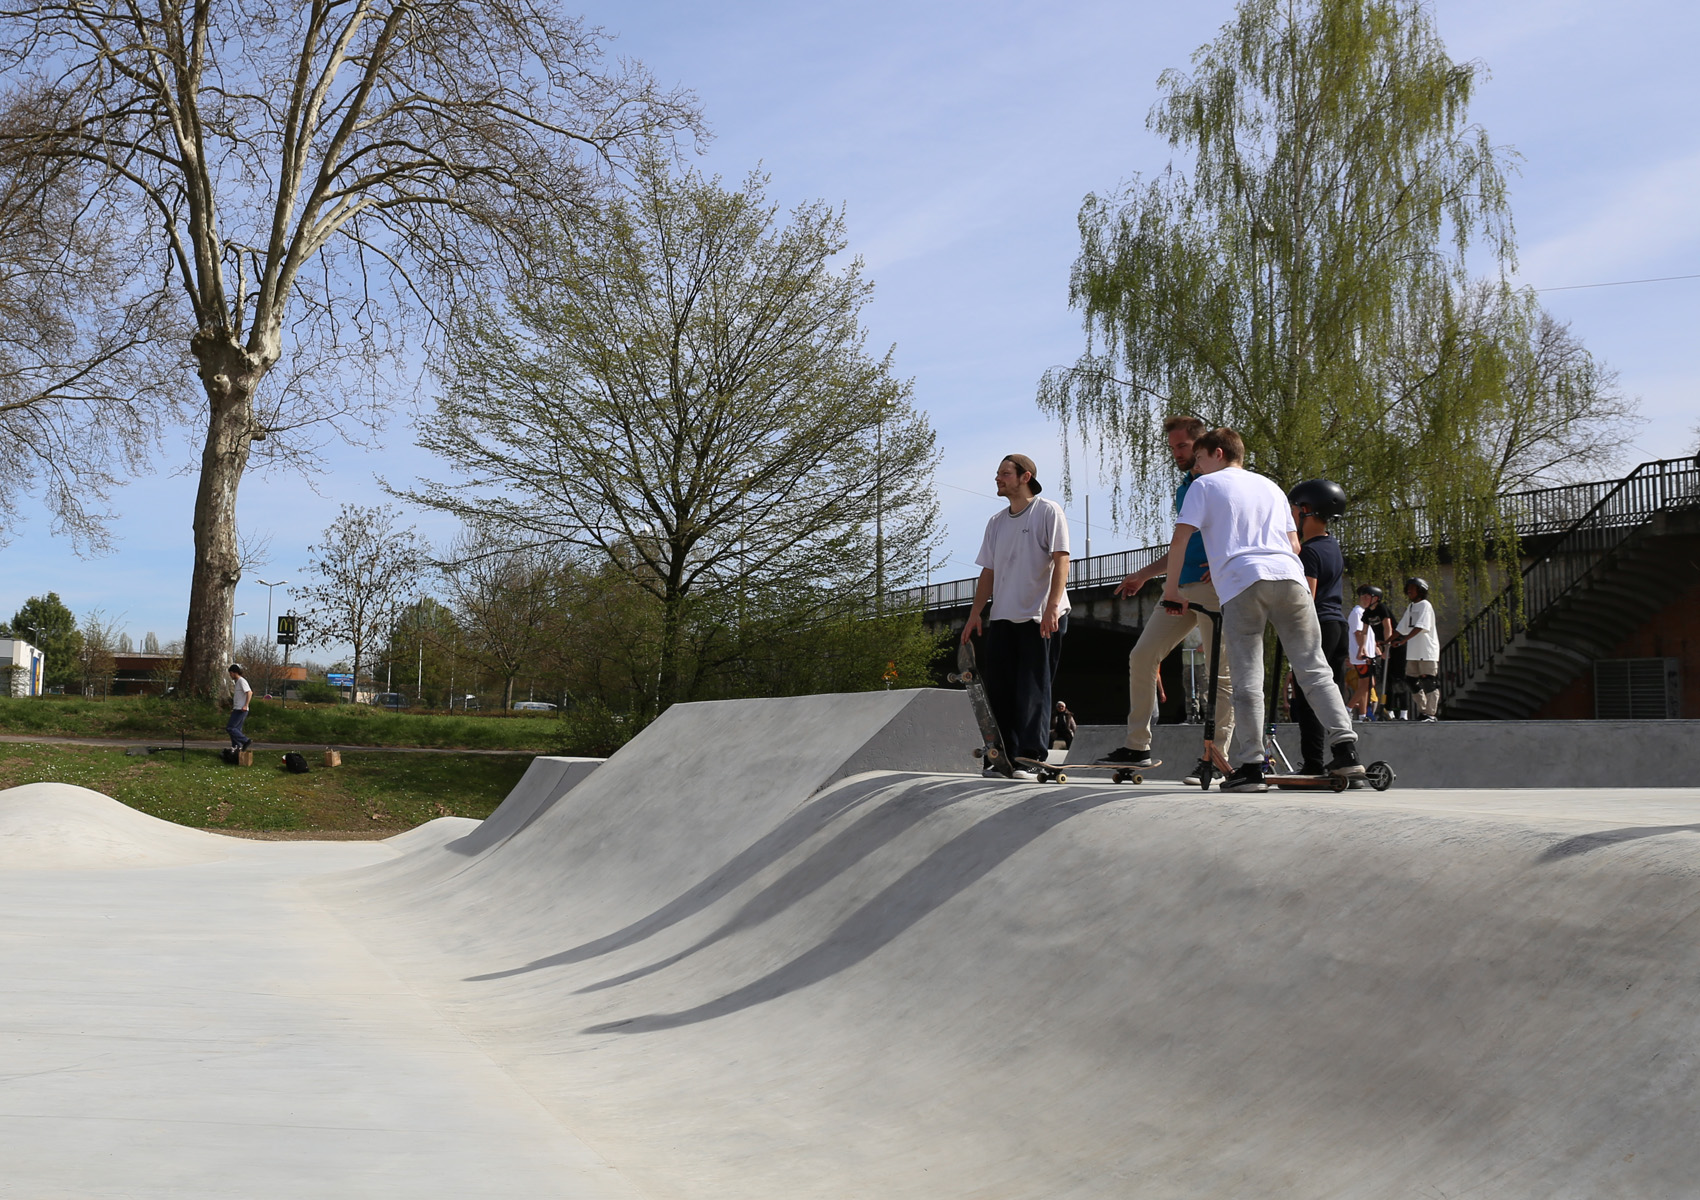 Le nouveau skatepark à Illkirch-Graffenstaden - Ville d'Illkirch-Graffenstaden